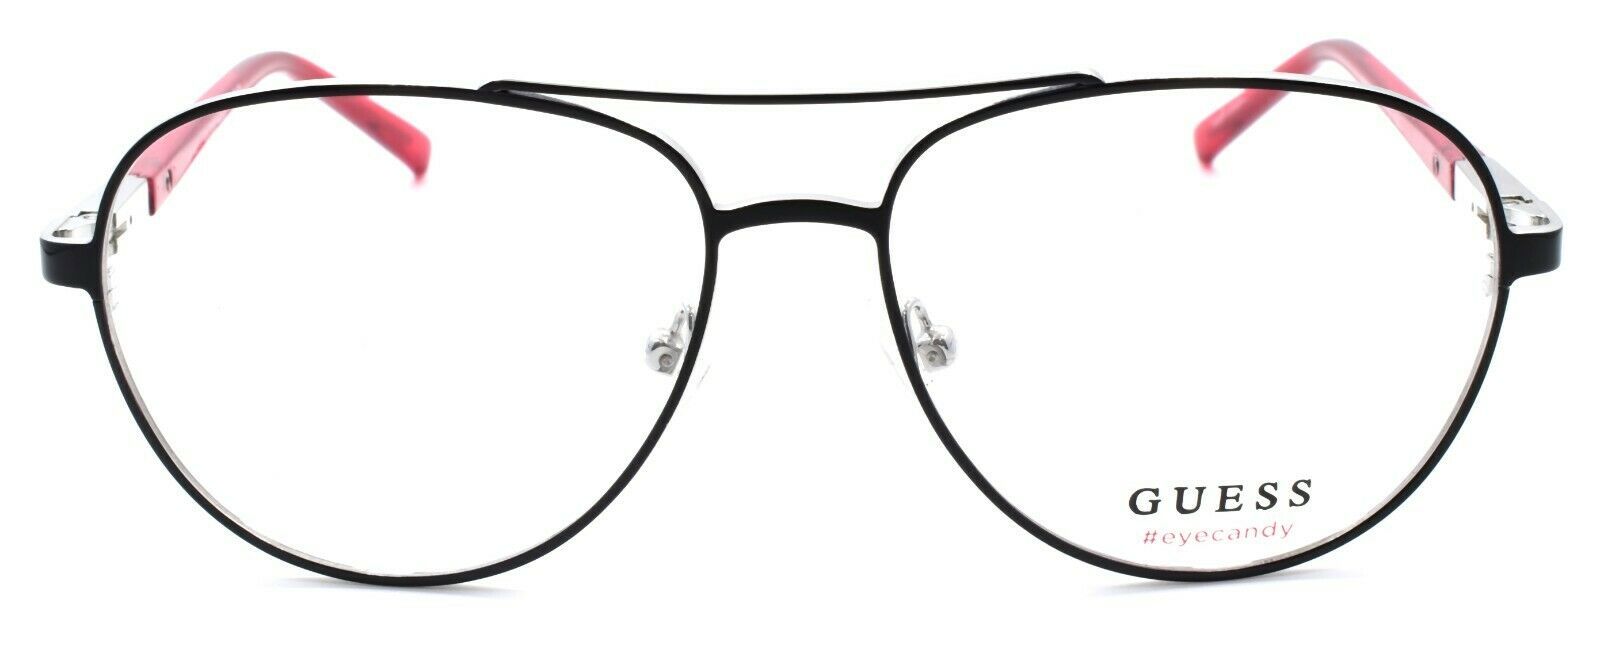 2-GUESS GU3029 005 Eye Candy Eyeglasses Frames Aviator 53-14-135 Black / Red-664689990771-IKSpecs